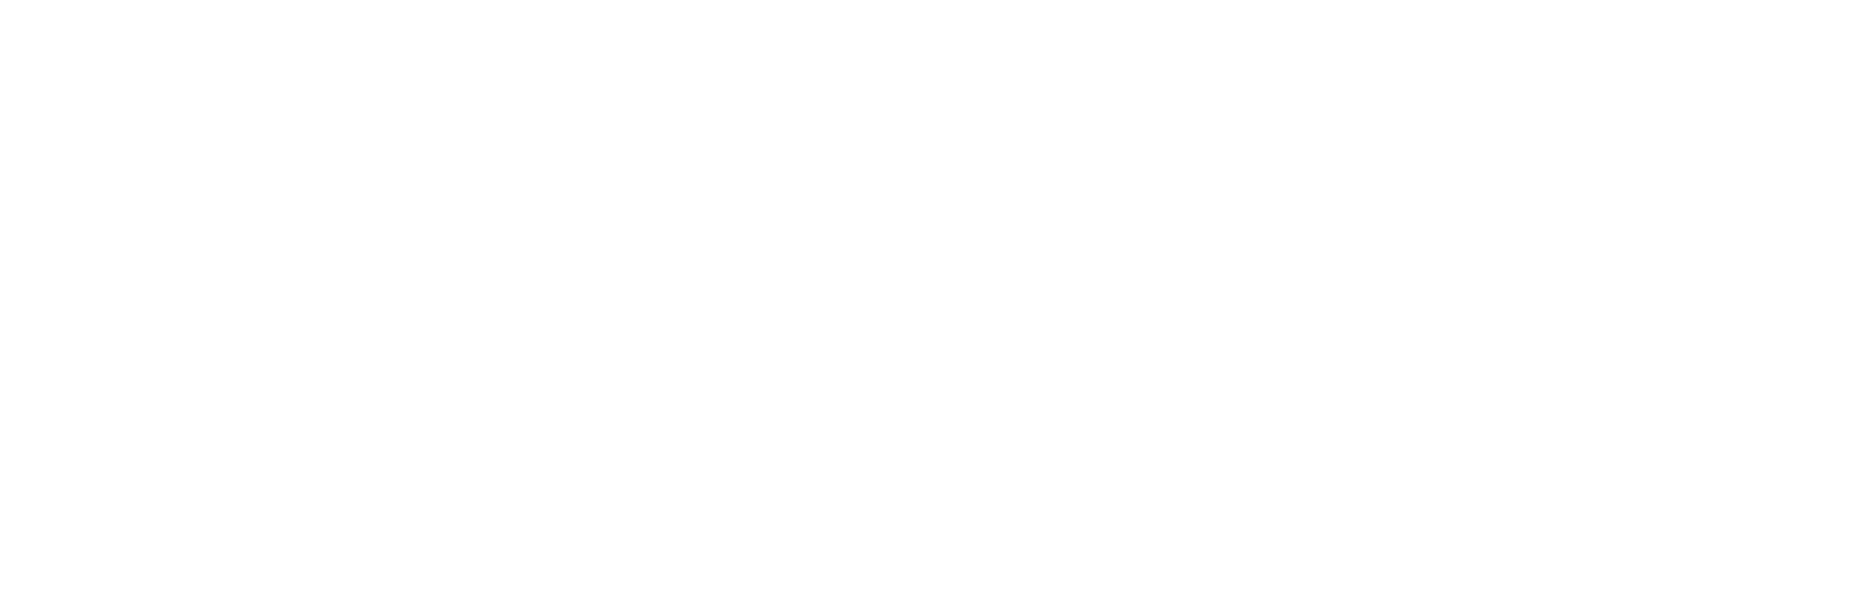 cyi logo 293x100b